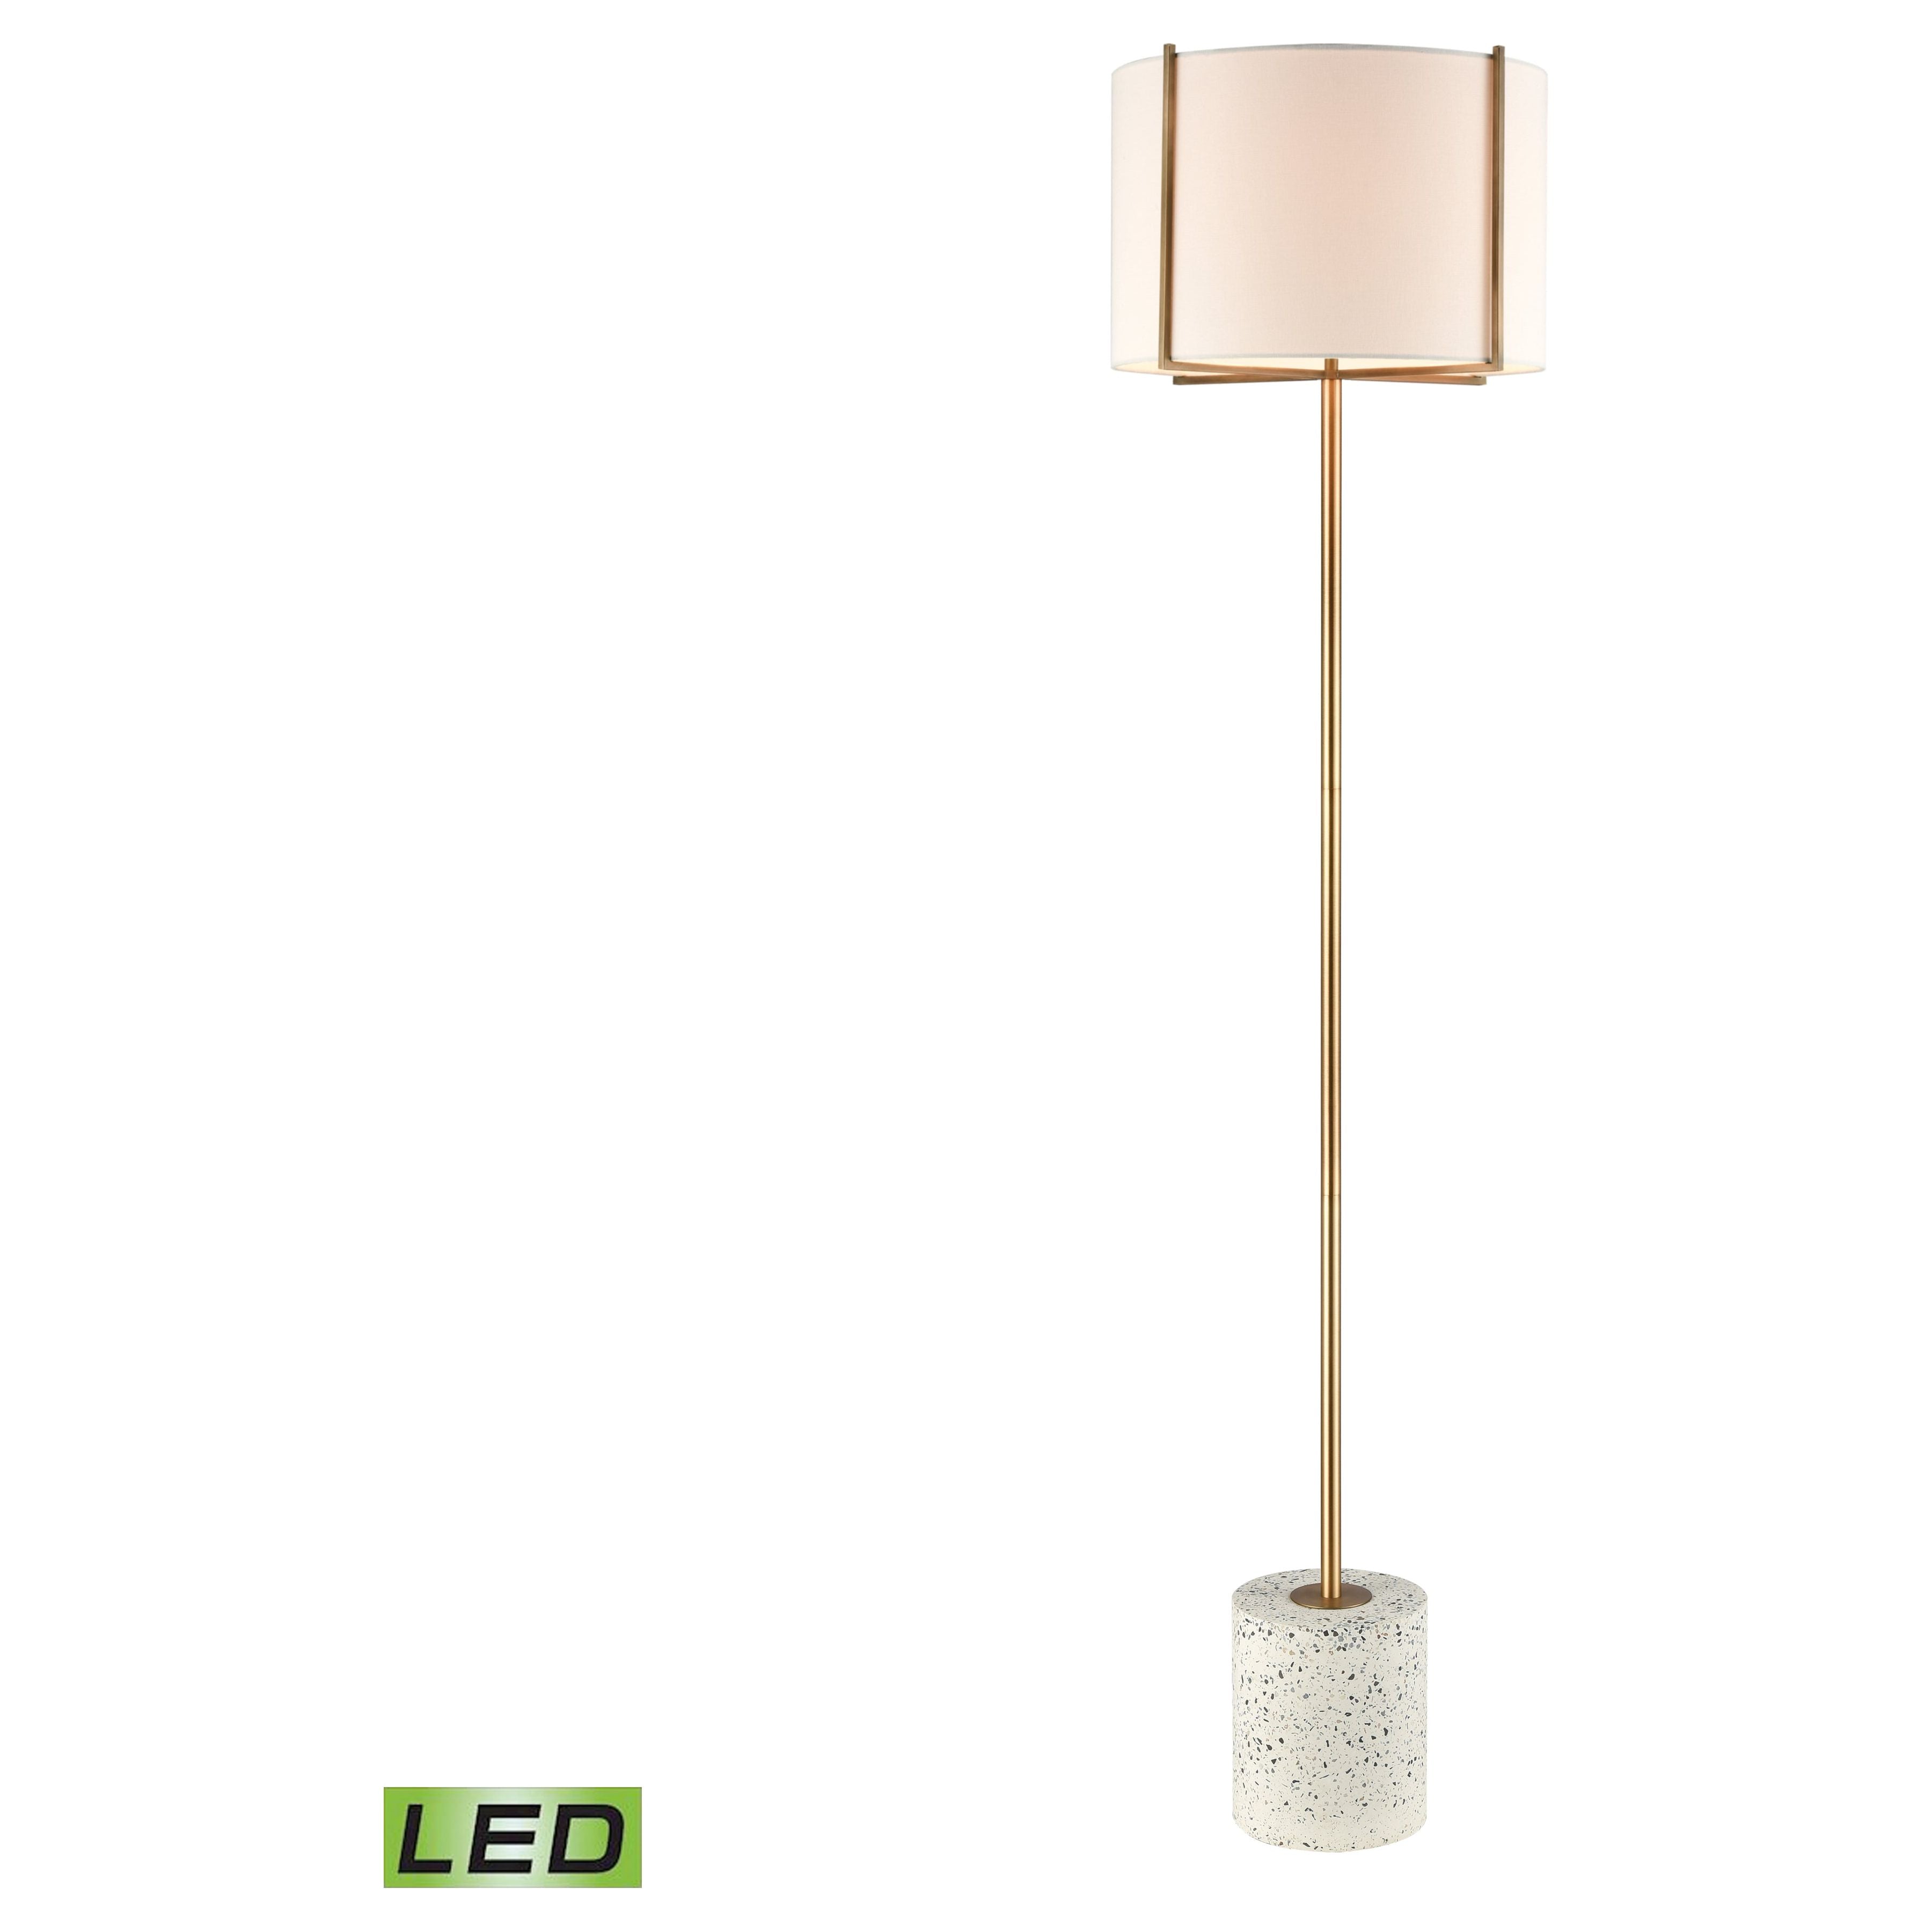 Trussed 63" High 1-Light Floor Lamp